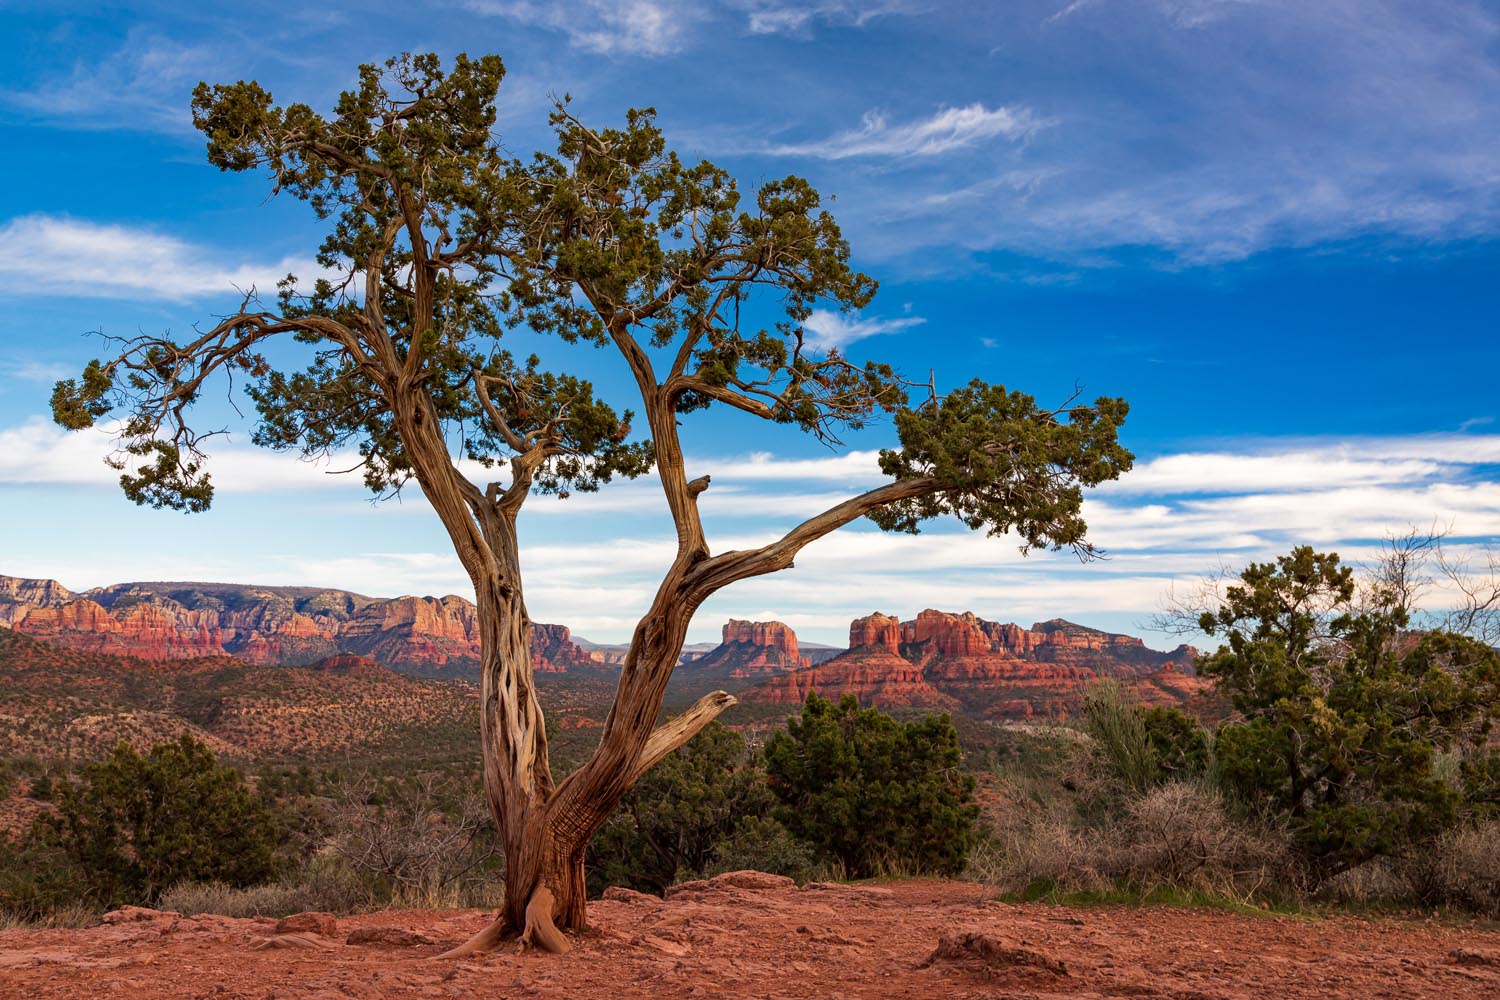 Michael Blachly: Tree with a View - Sedona, Arizona